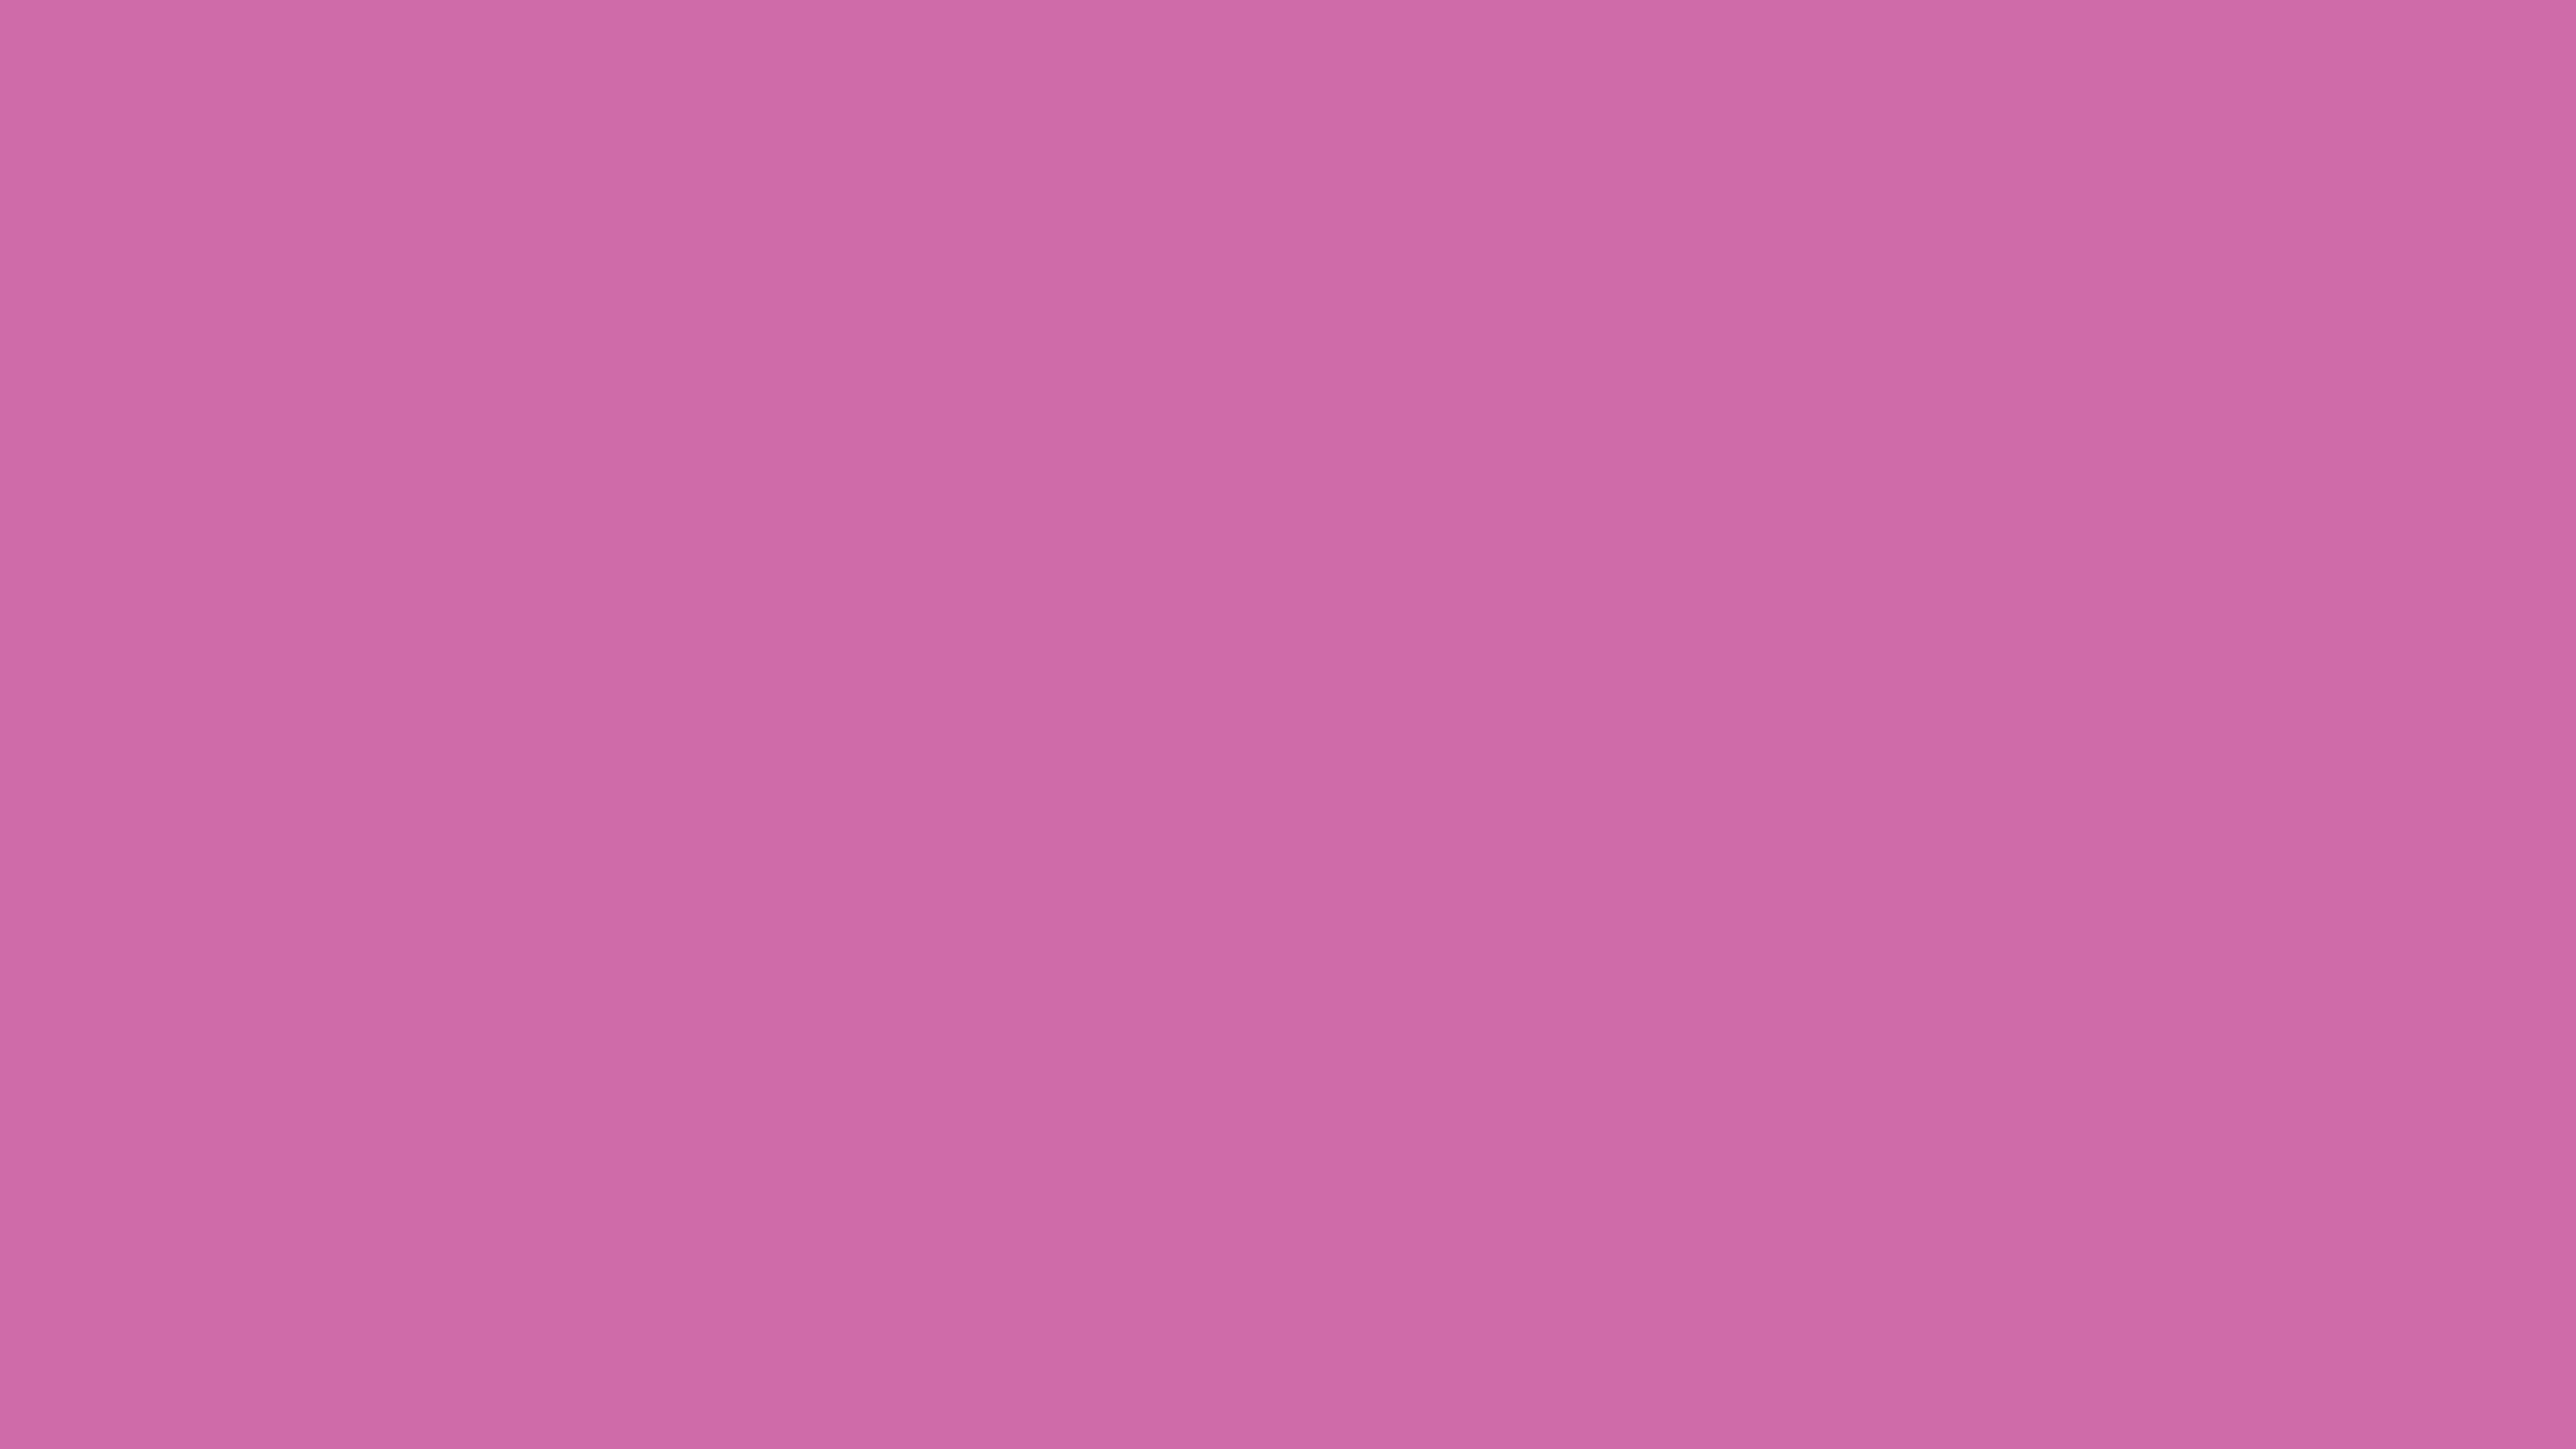 7680x4320 Super Pink Solid Color Background